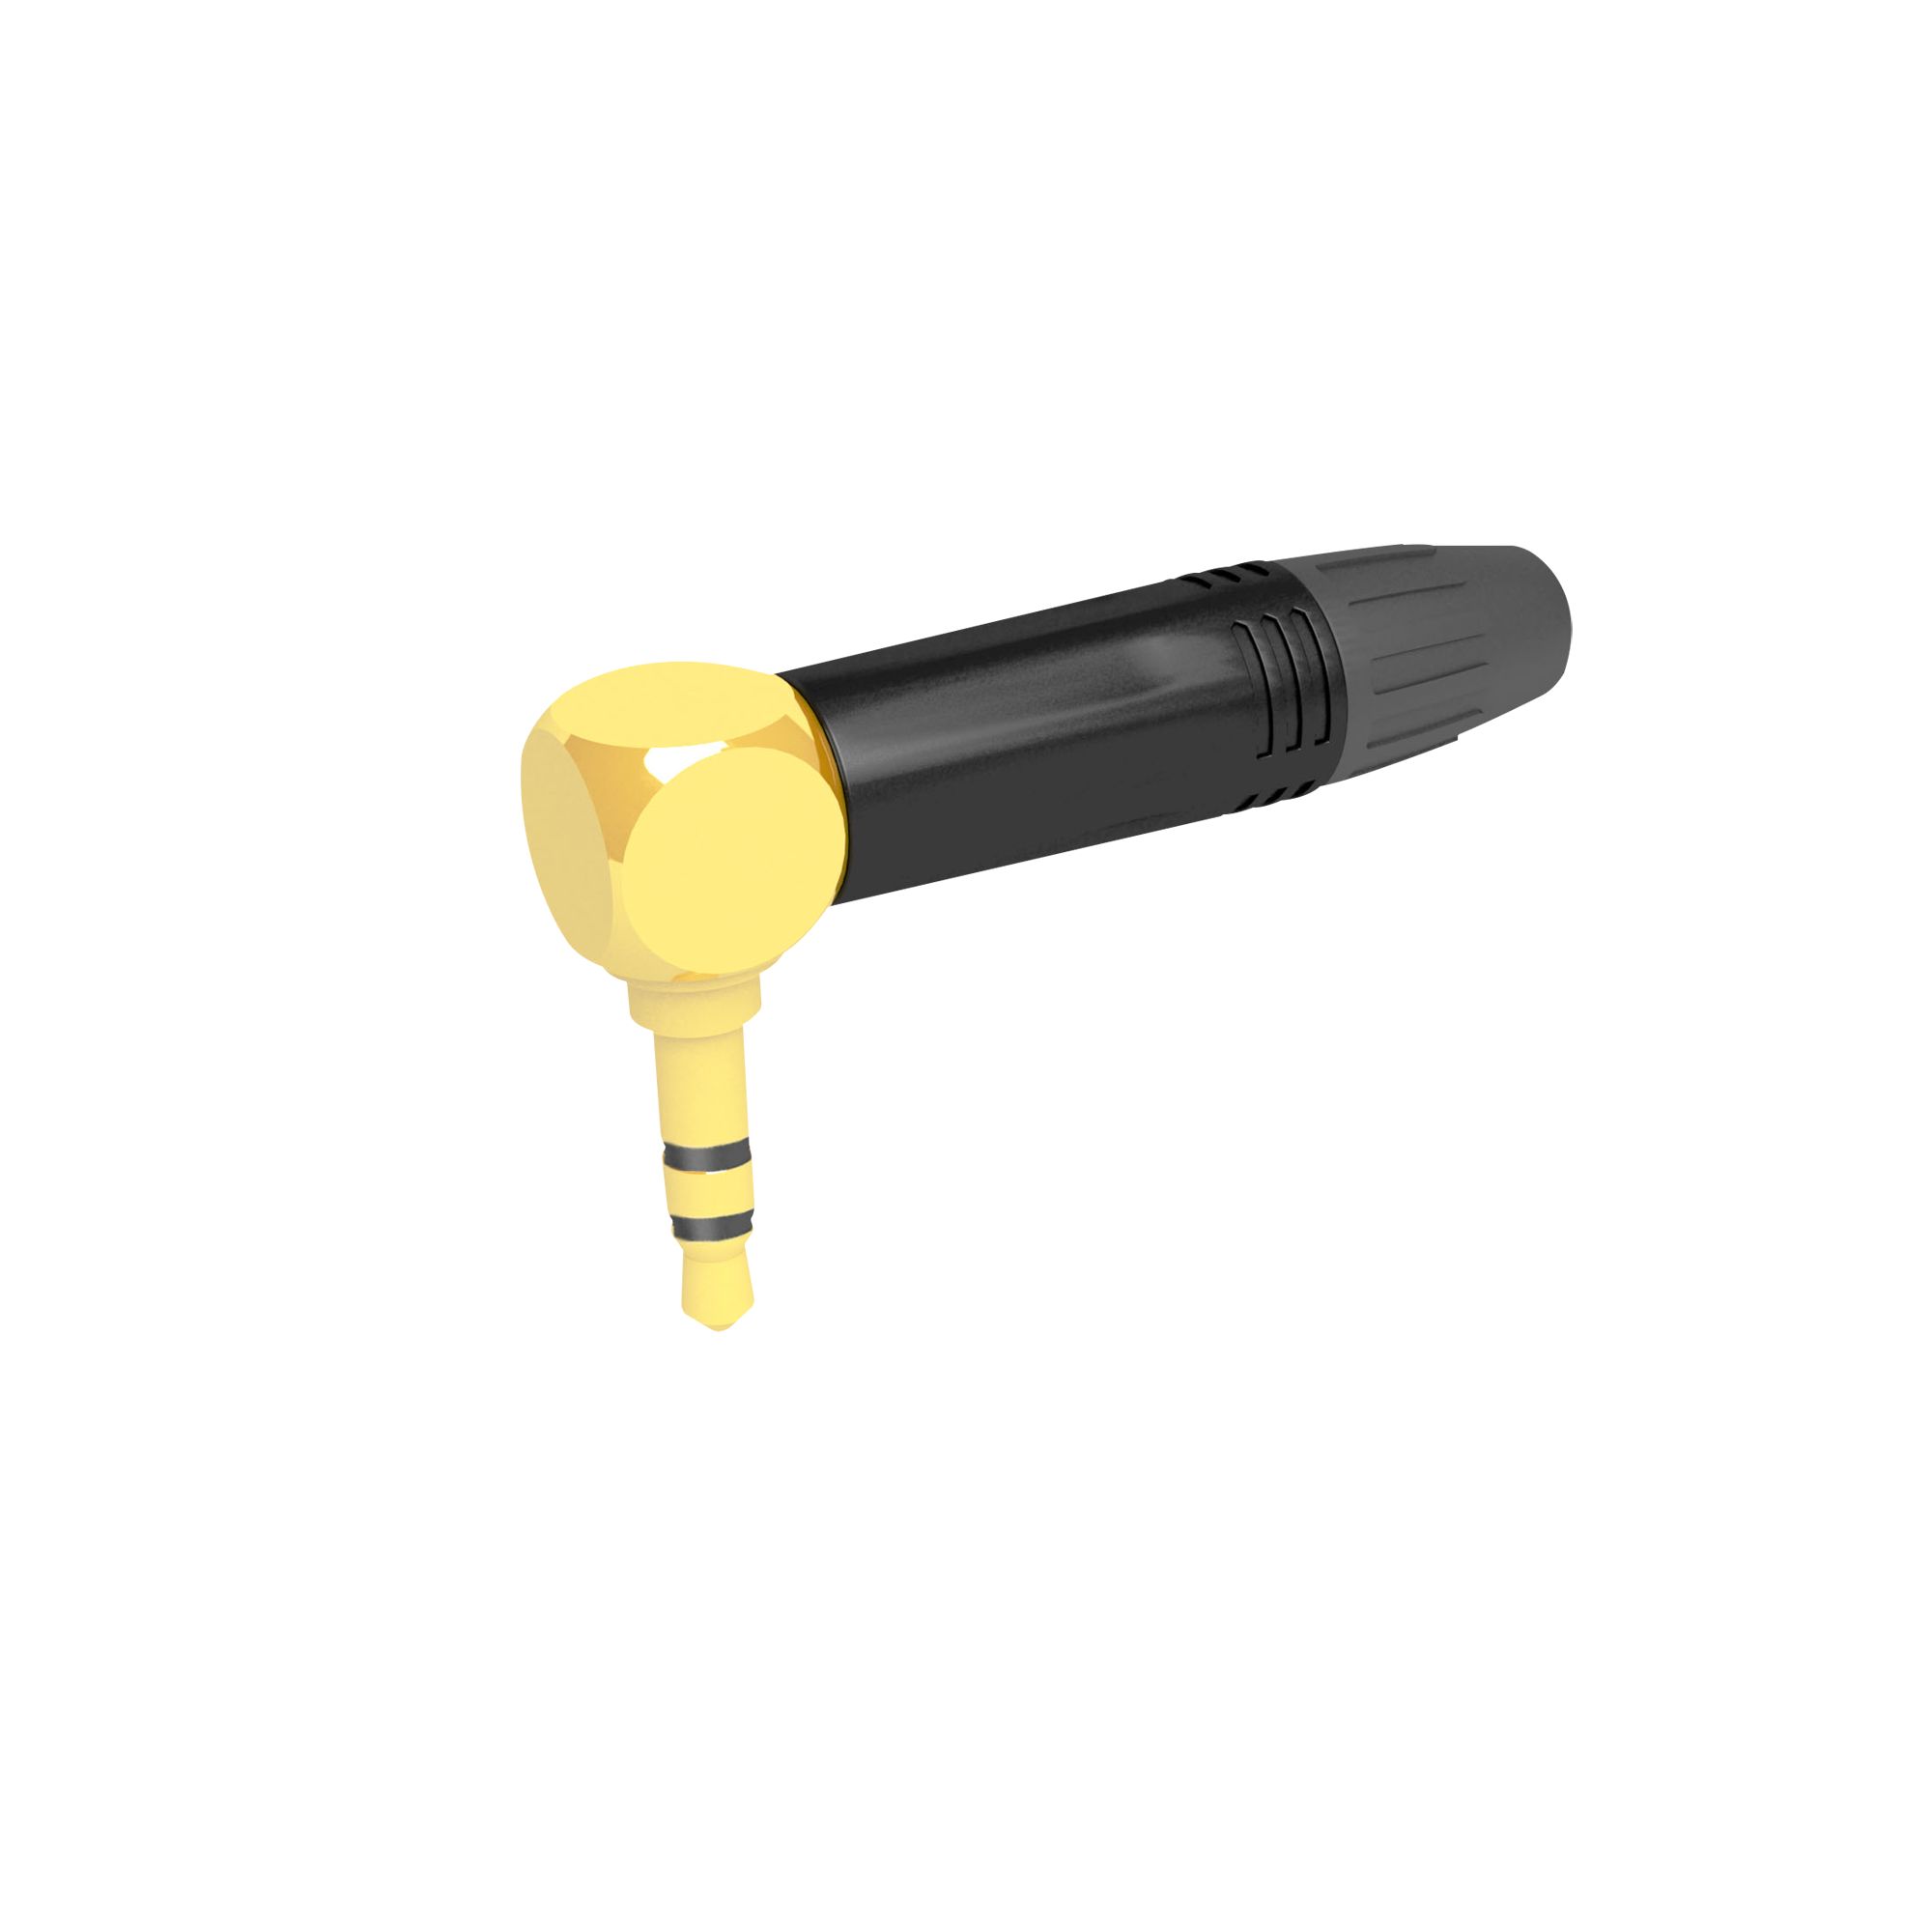 Seetronic Jack Plug 3.5 mm Stereo - 90° Vergoldete Kontakte - schwarzes Gehäuse - schwarze Endkappe